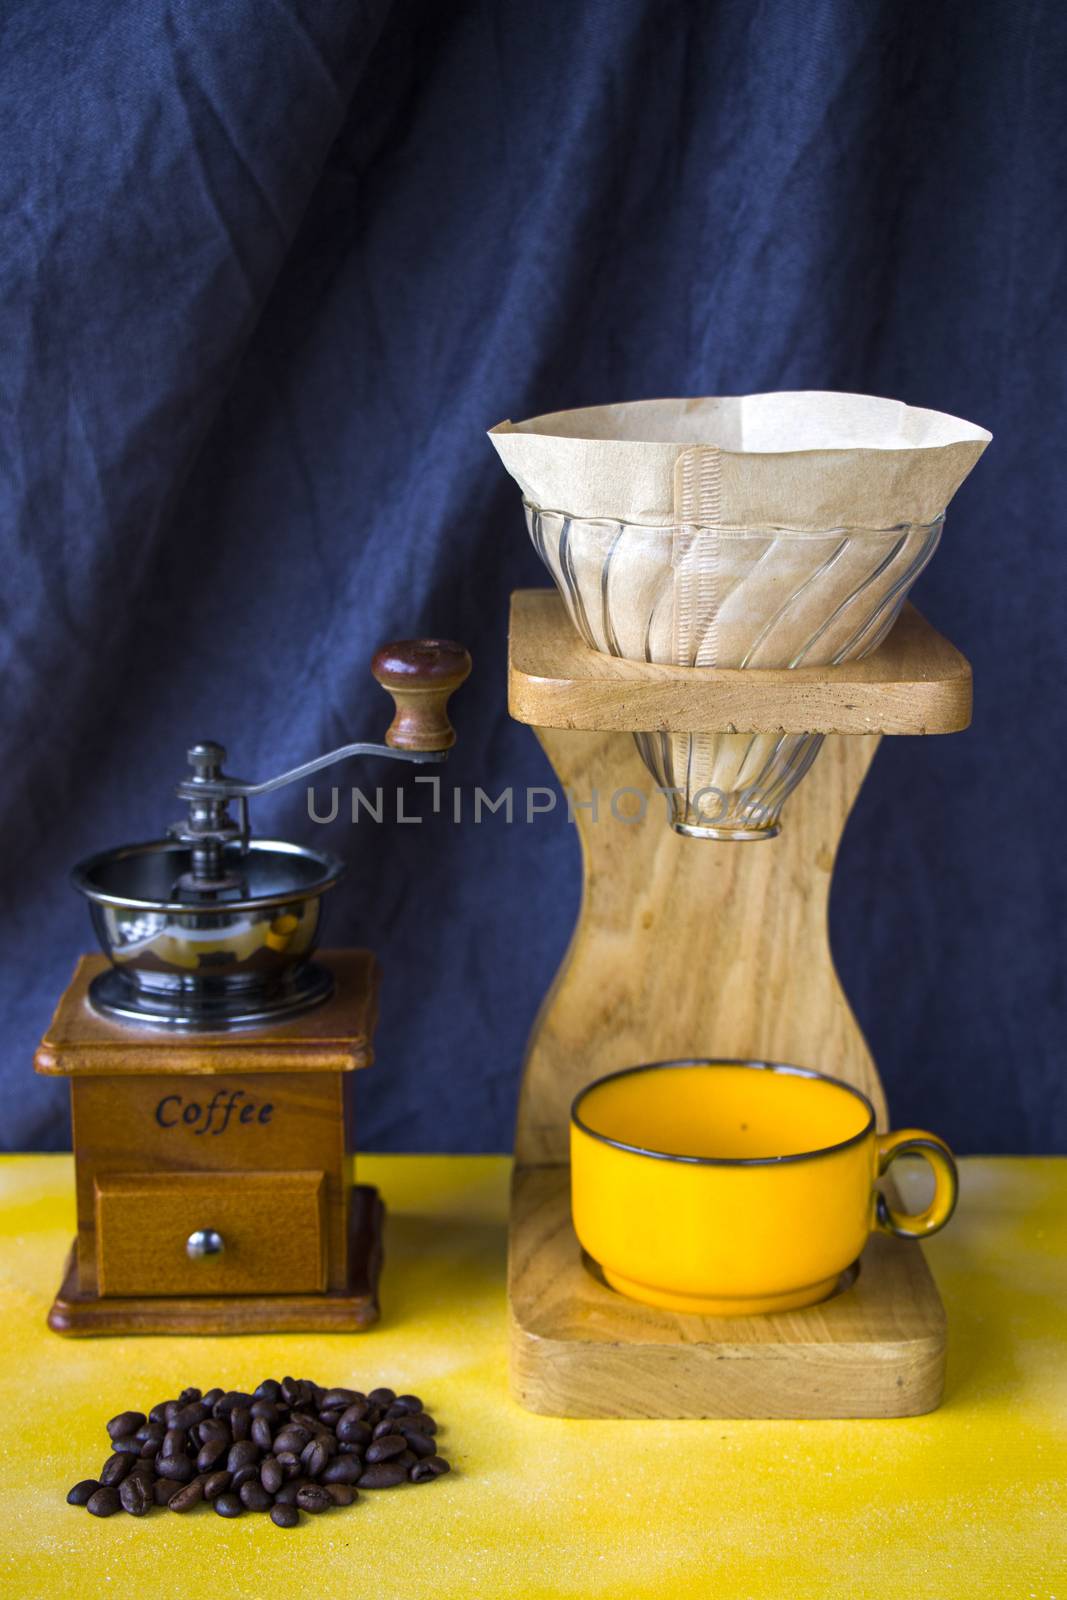 Pour over coffee maker, coffee cup and mug, studio shoot